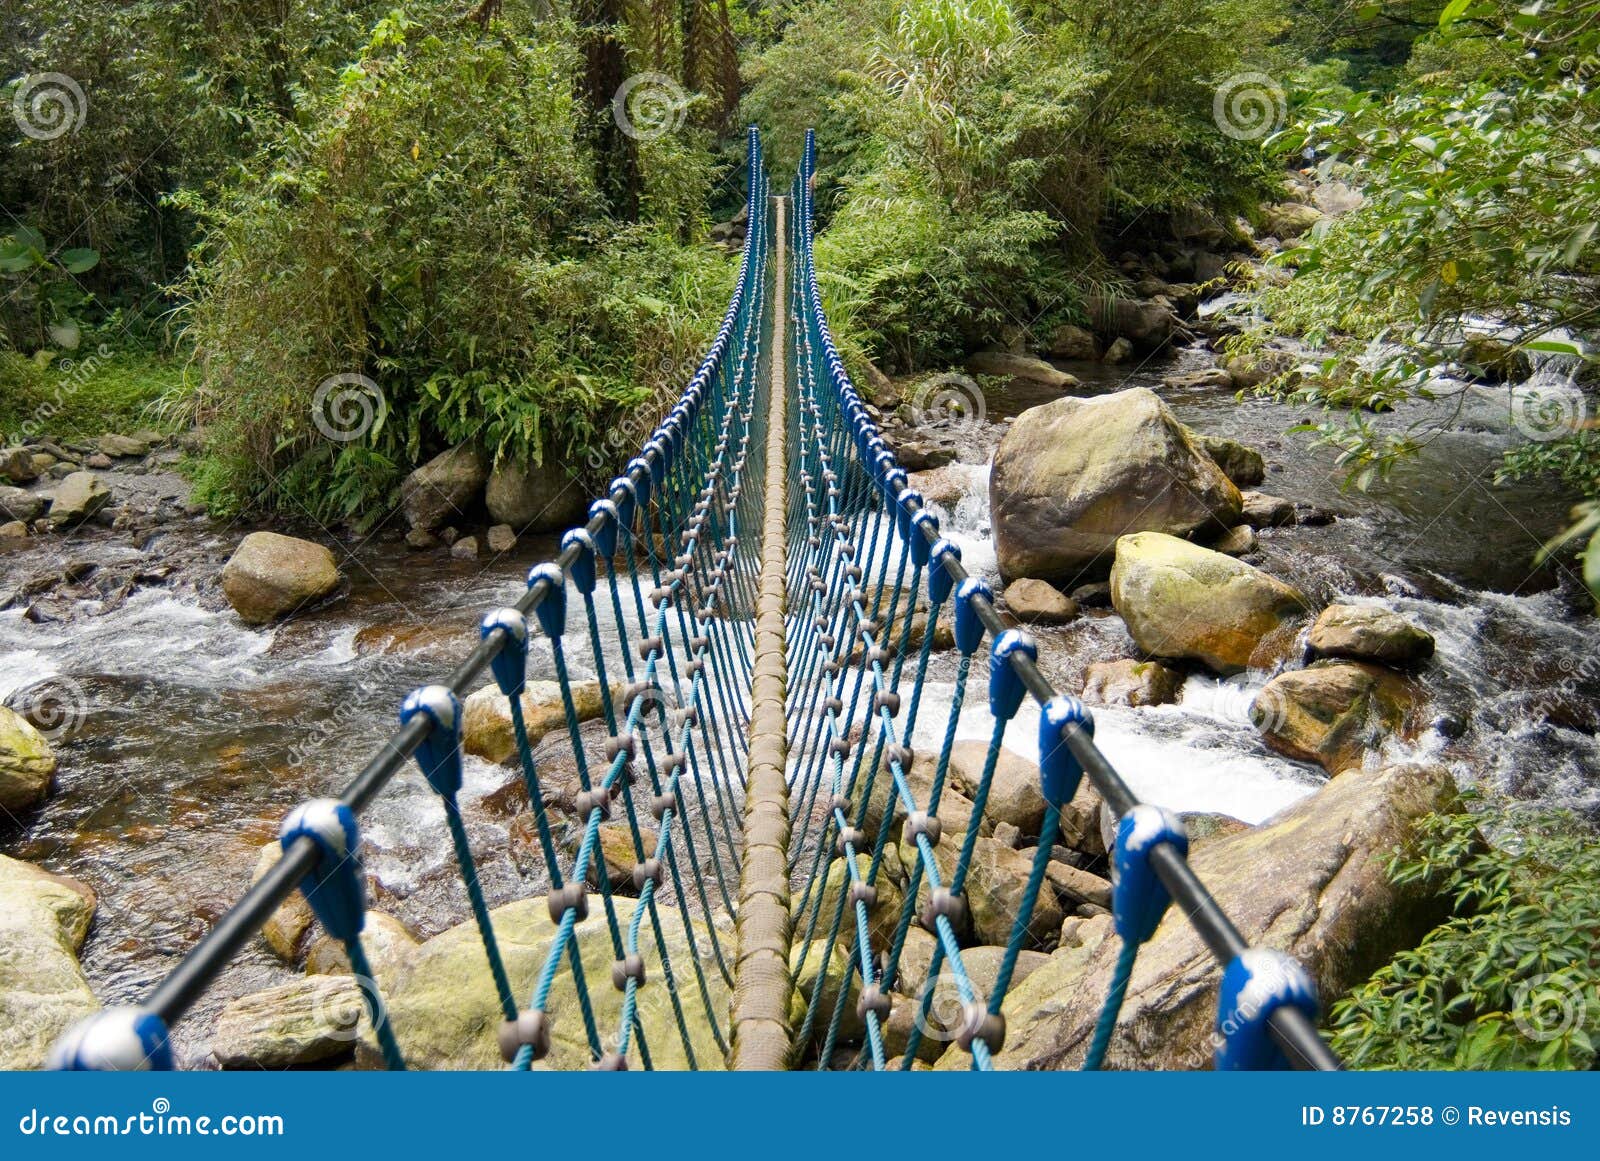 Single rope bridge stock photo. Image of hang, pedestrian - 8767258